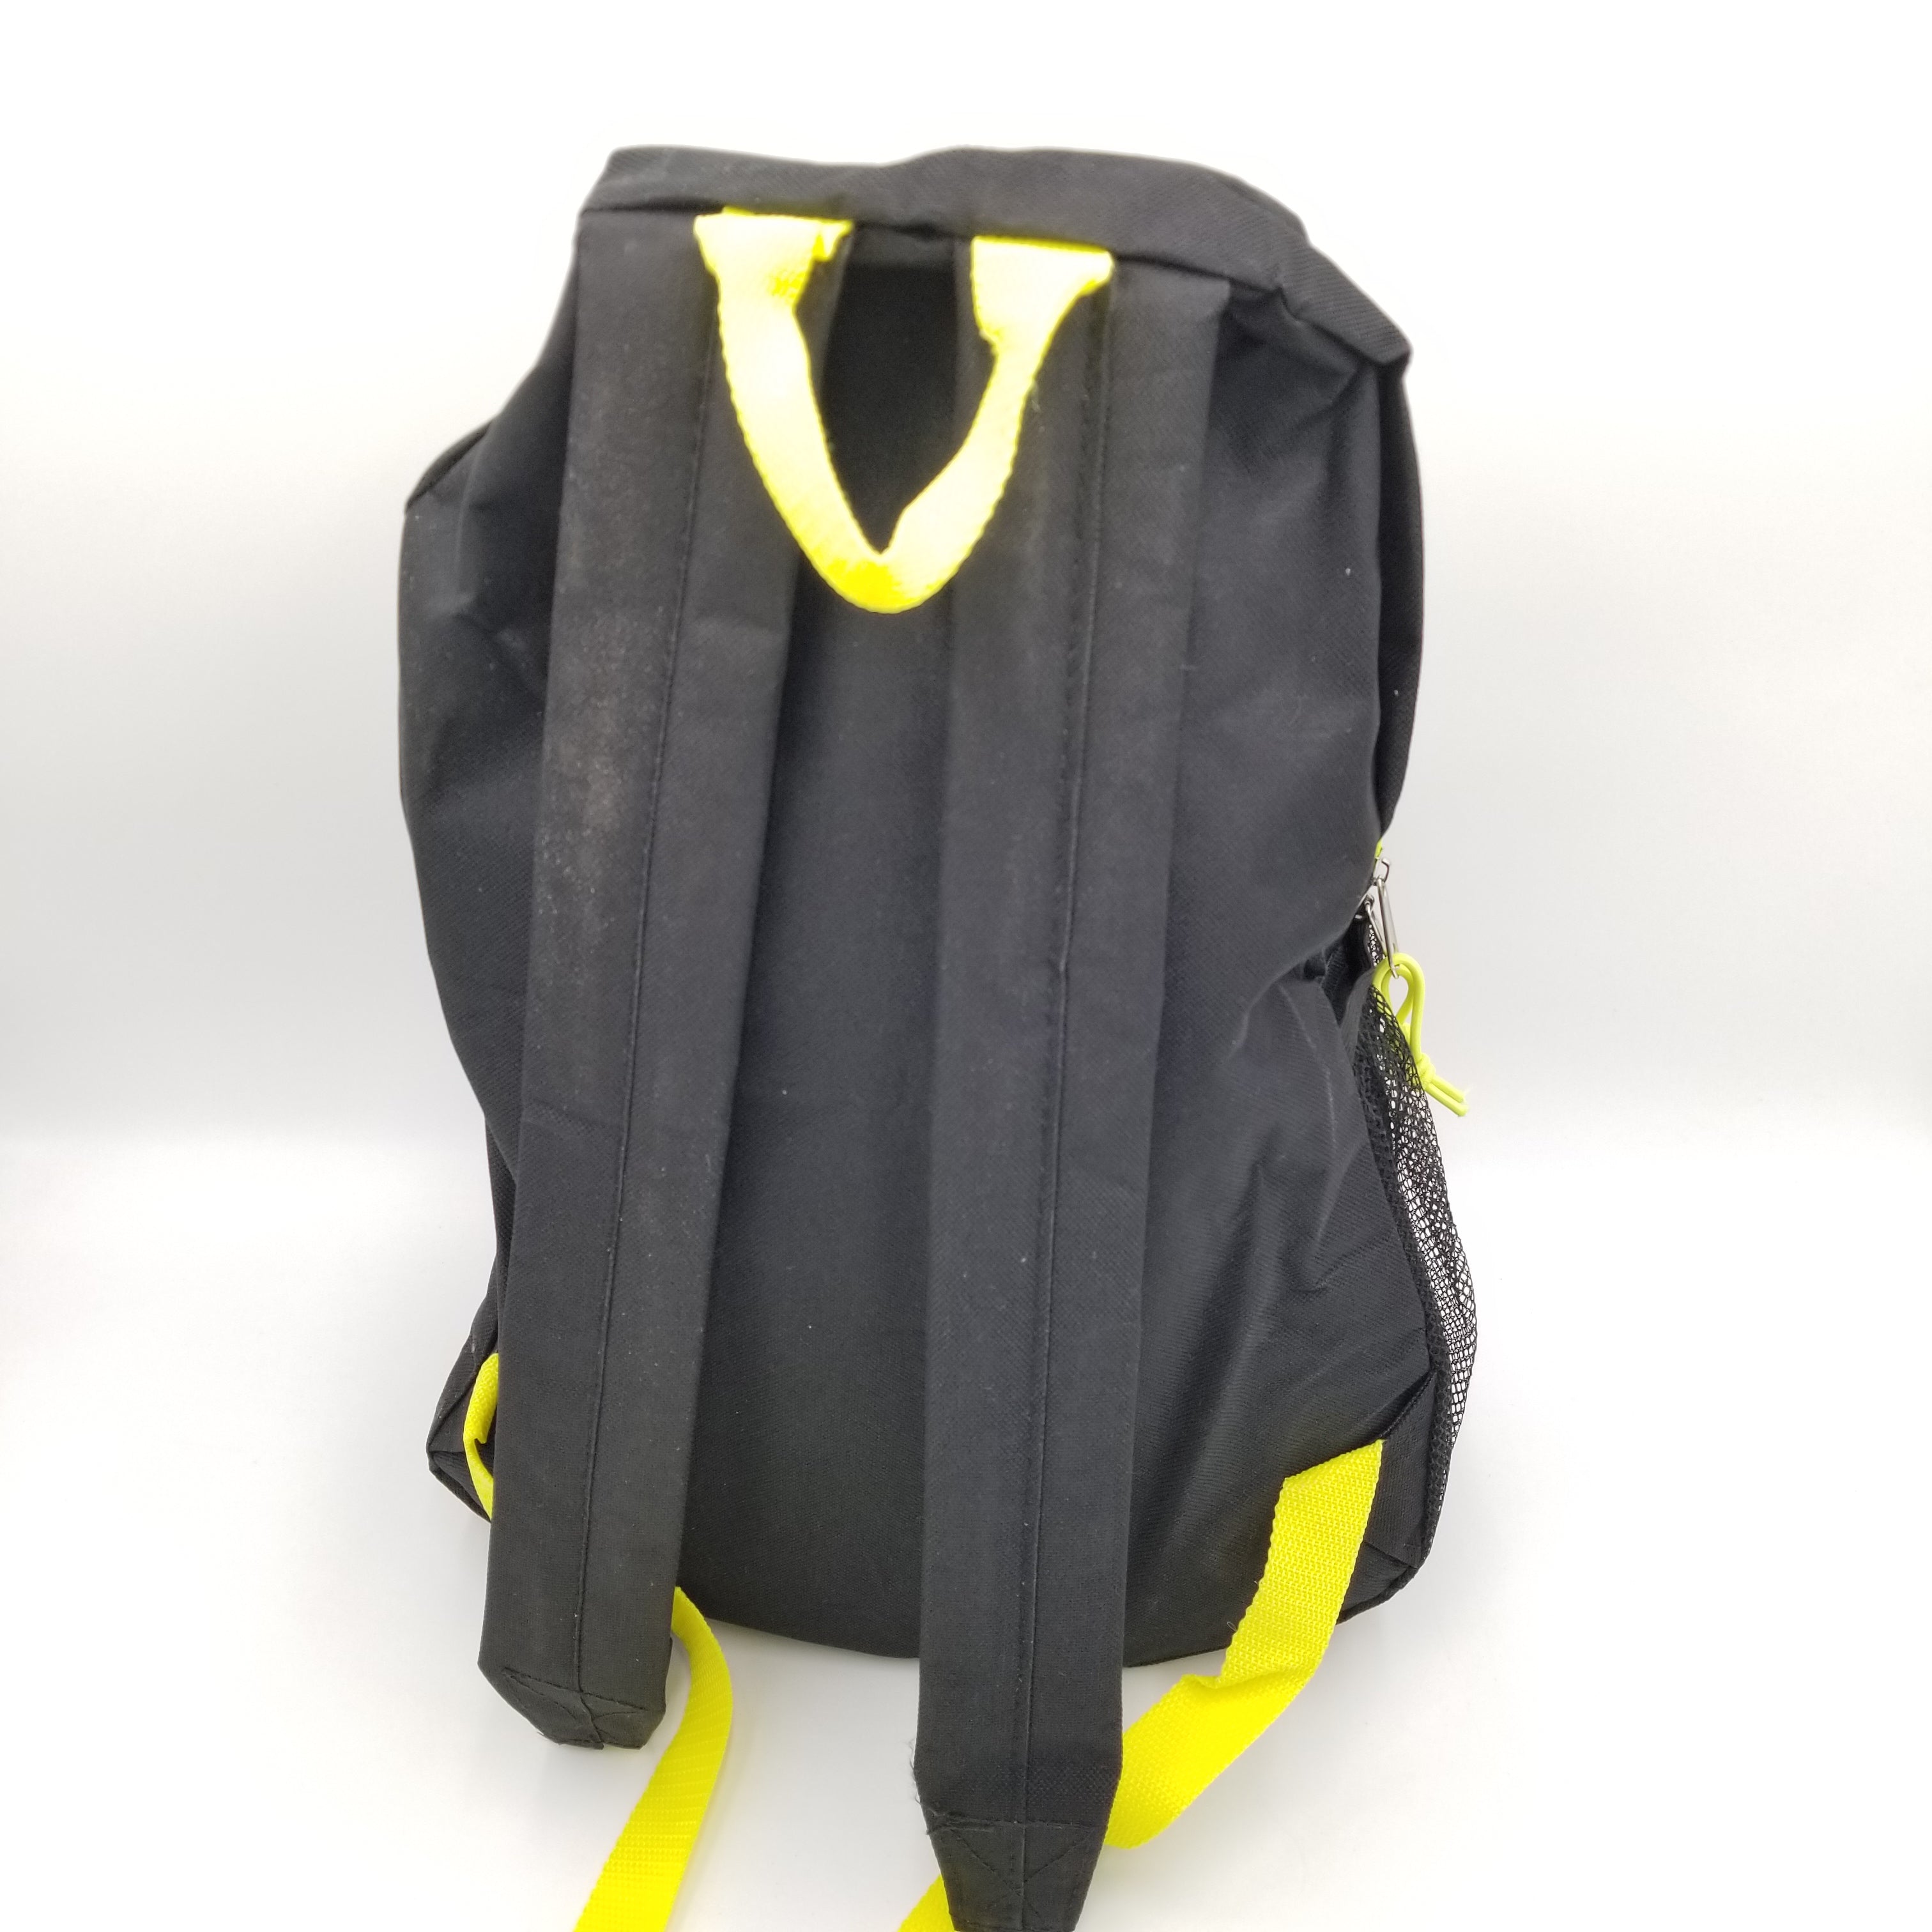 ProSport Backpack- Black/Yellow